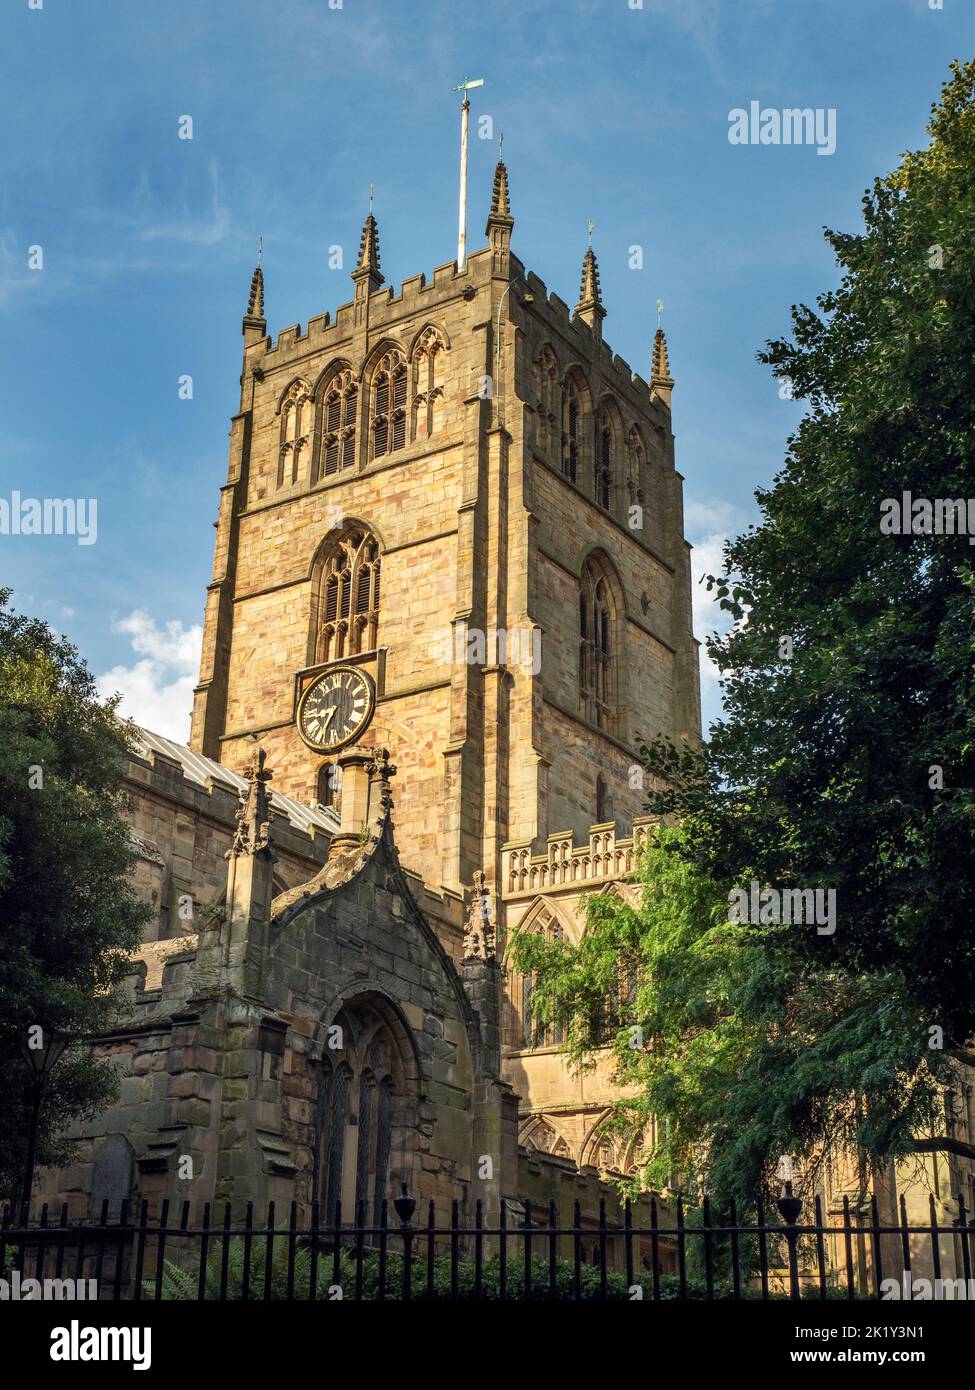 Die Klasse I führte die Kirche St. Mary aus dem 13. Jahrhundert in Nottingham Nottinghamshire England ein Stockfoto